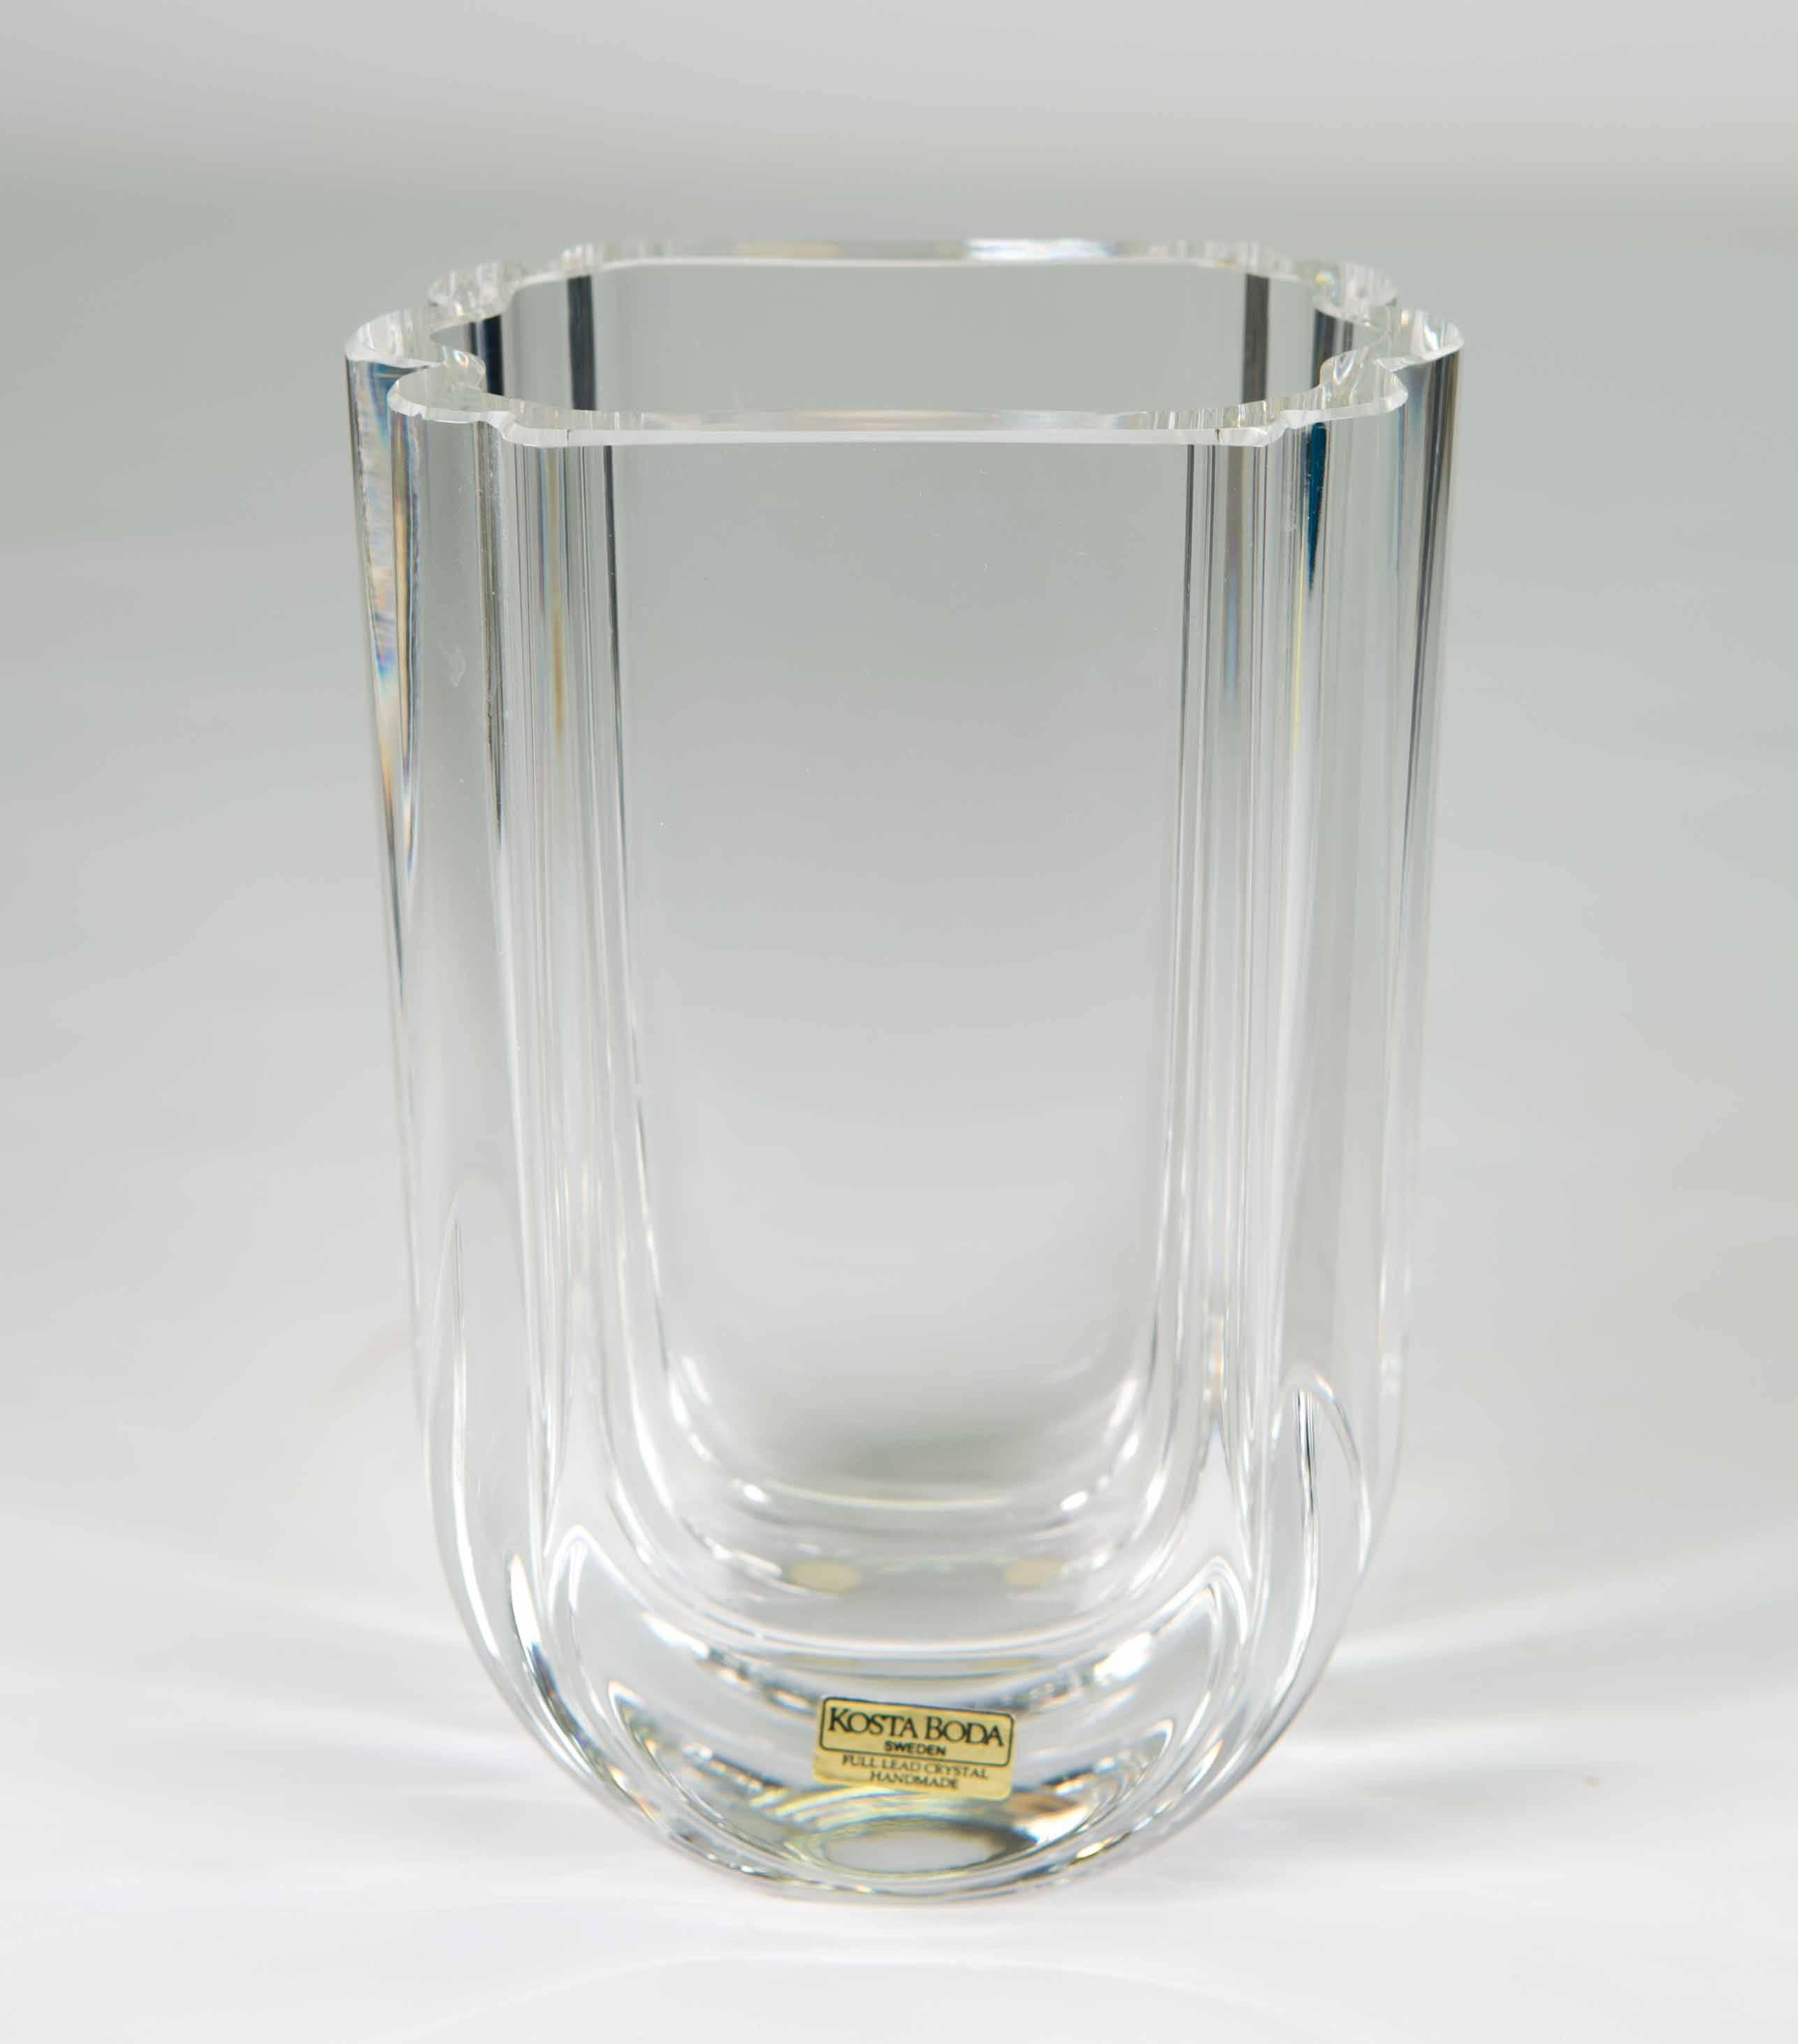 Crystal vase by Kosta Boda. Designed by Göran Warff

Leaded crystal.